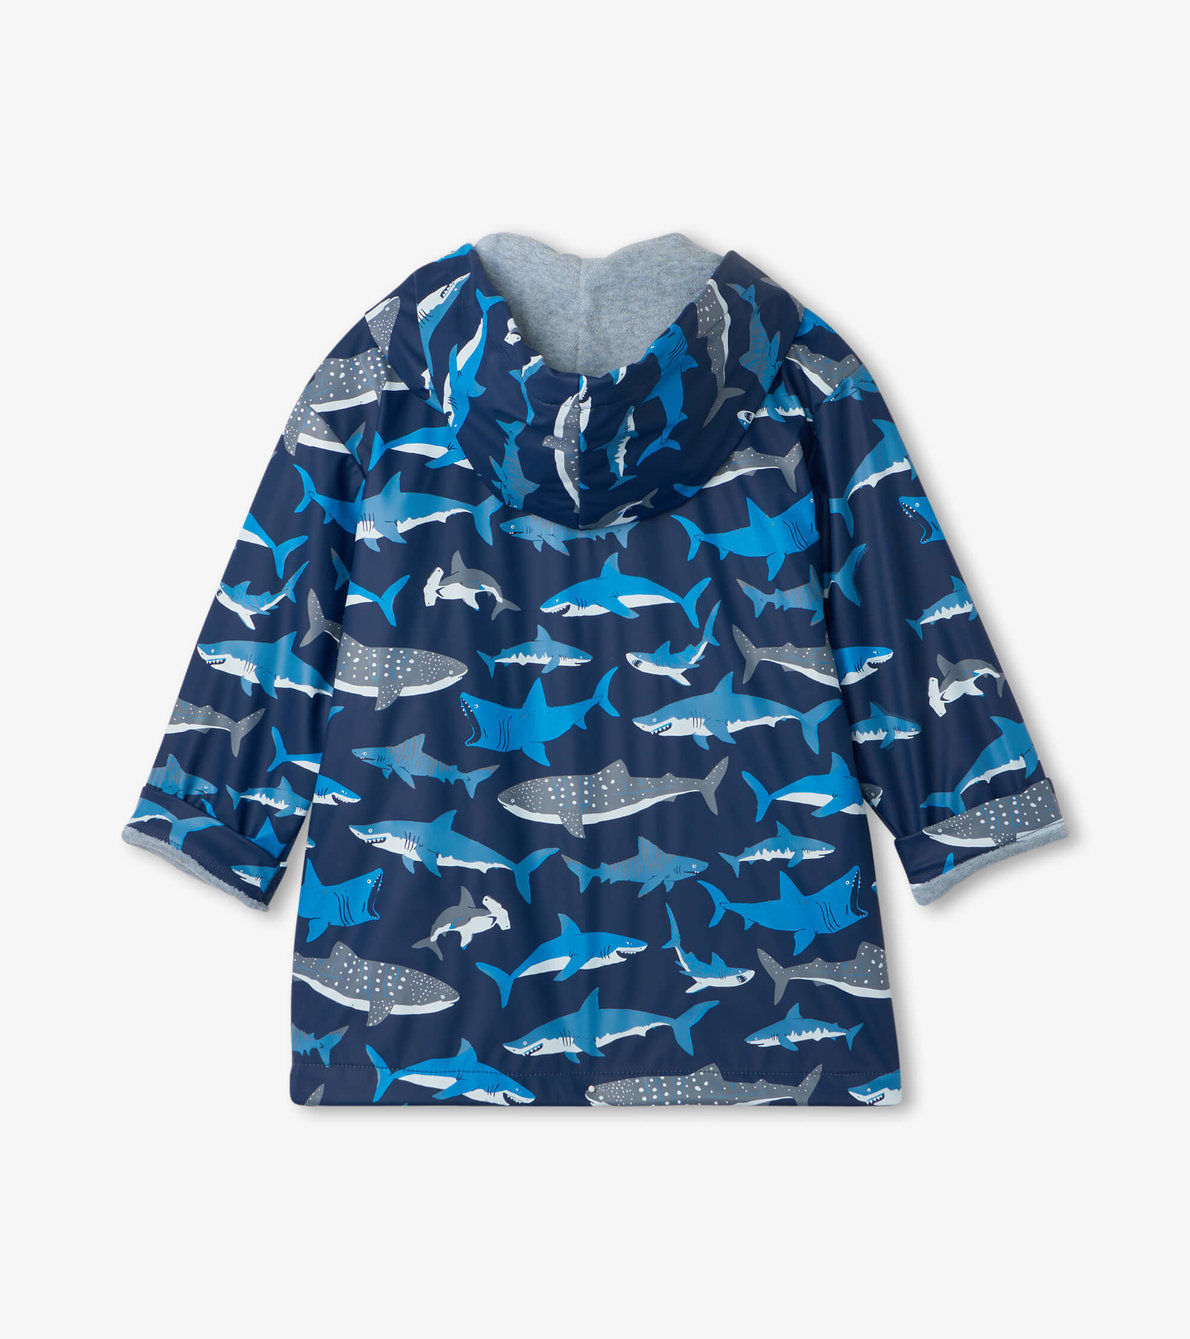 View larger image of Shark School Raincoat